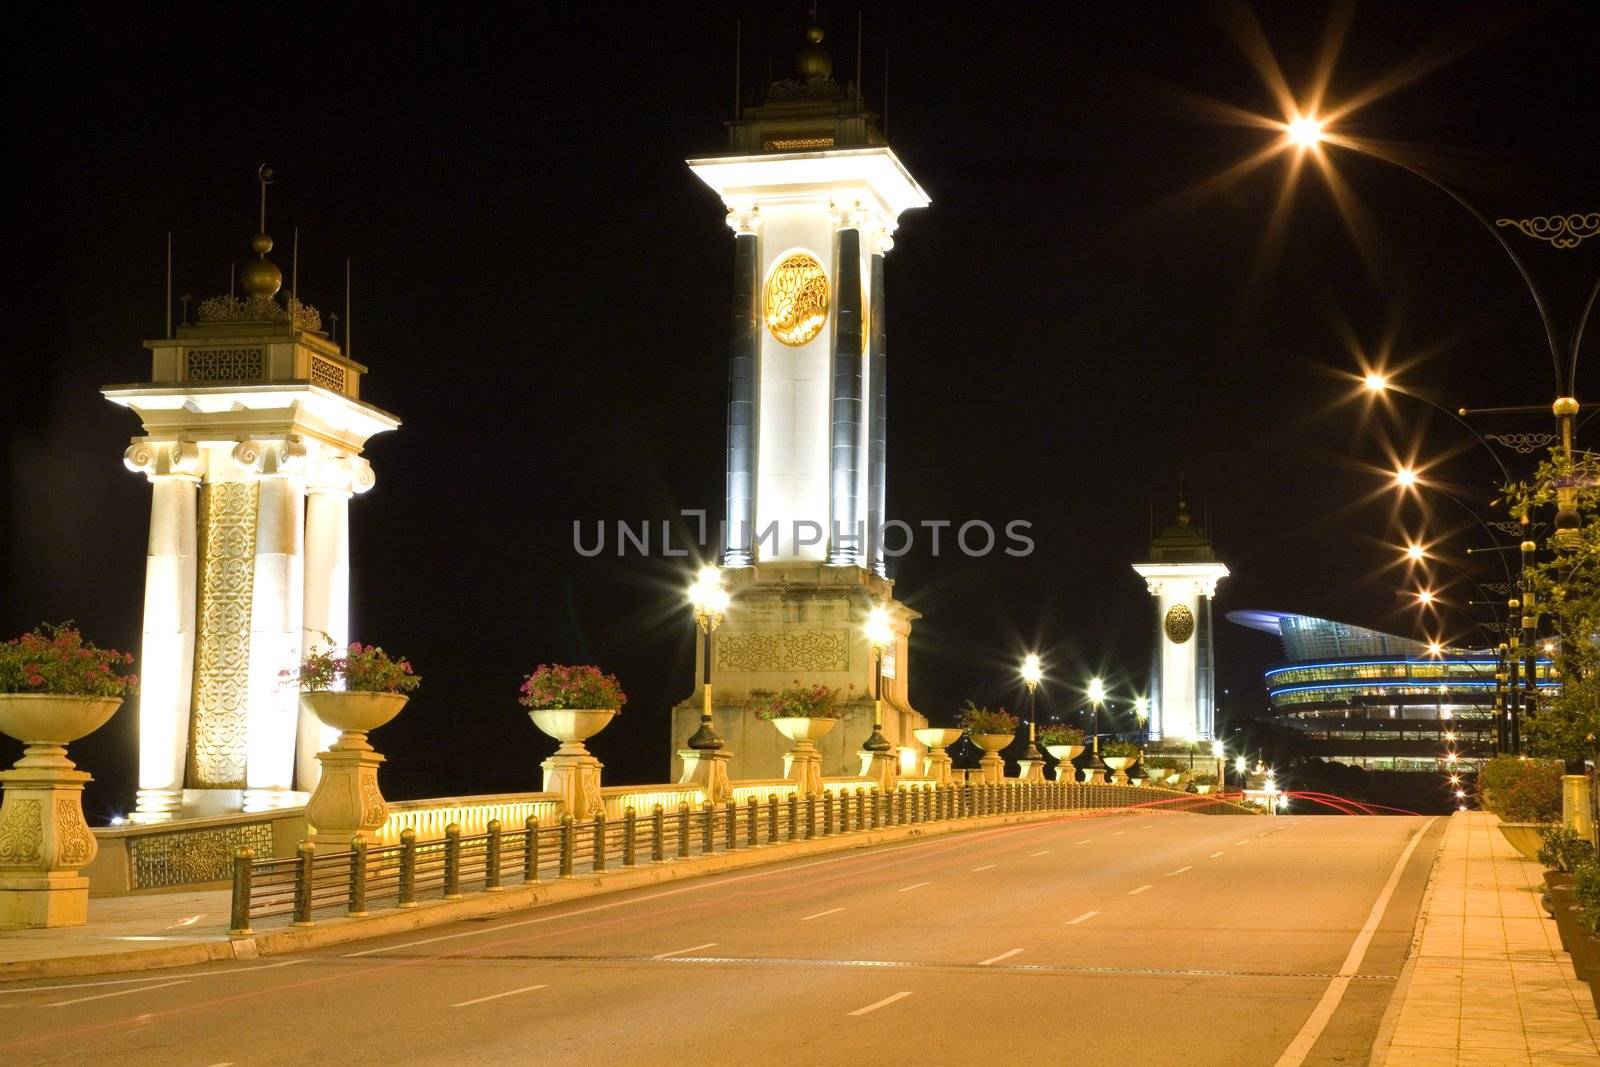 Night image of a bridge at Putrajaya, Malaysia.